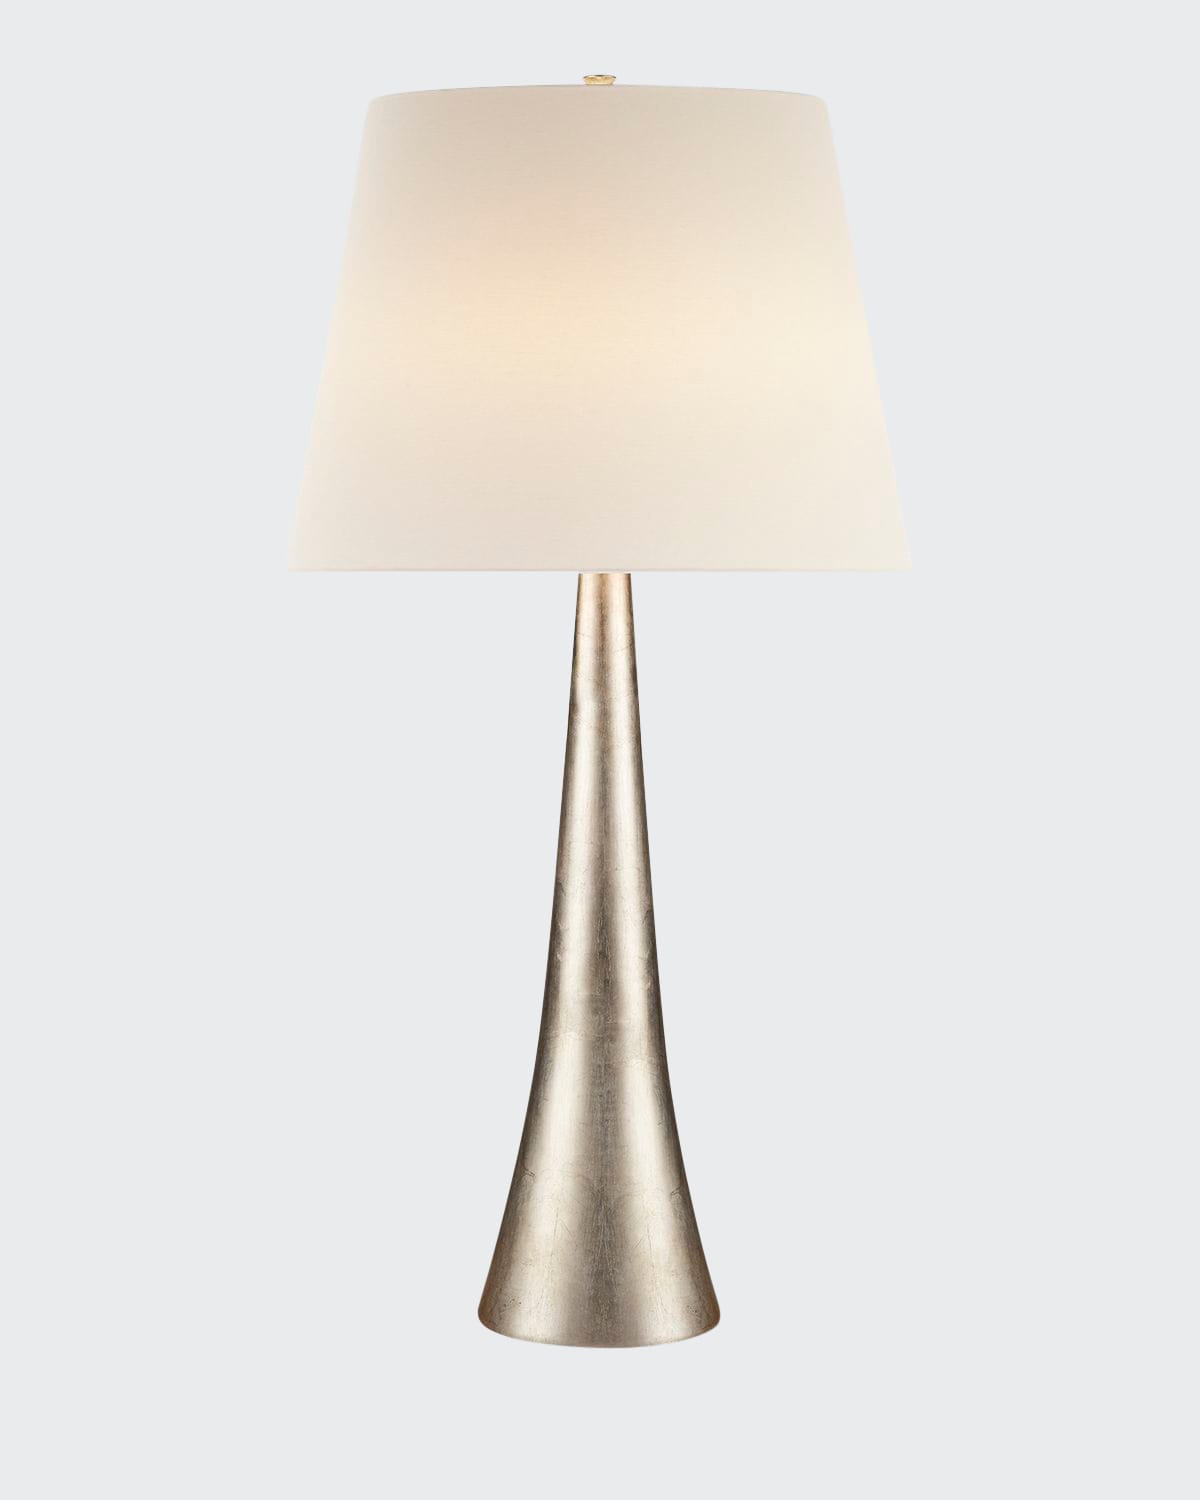 Aerin Dover Table Lamp In Silver